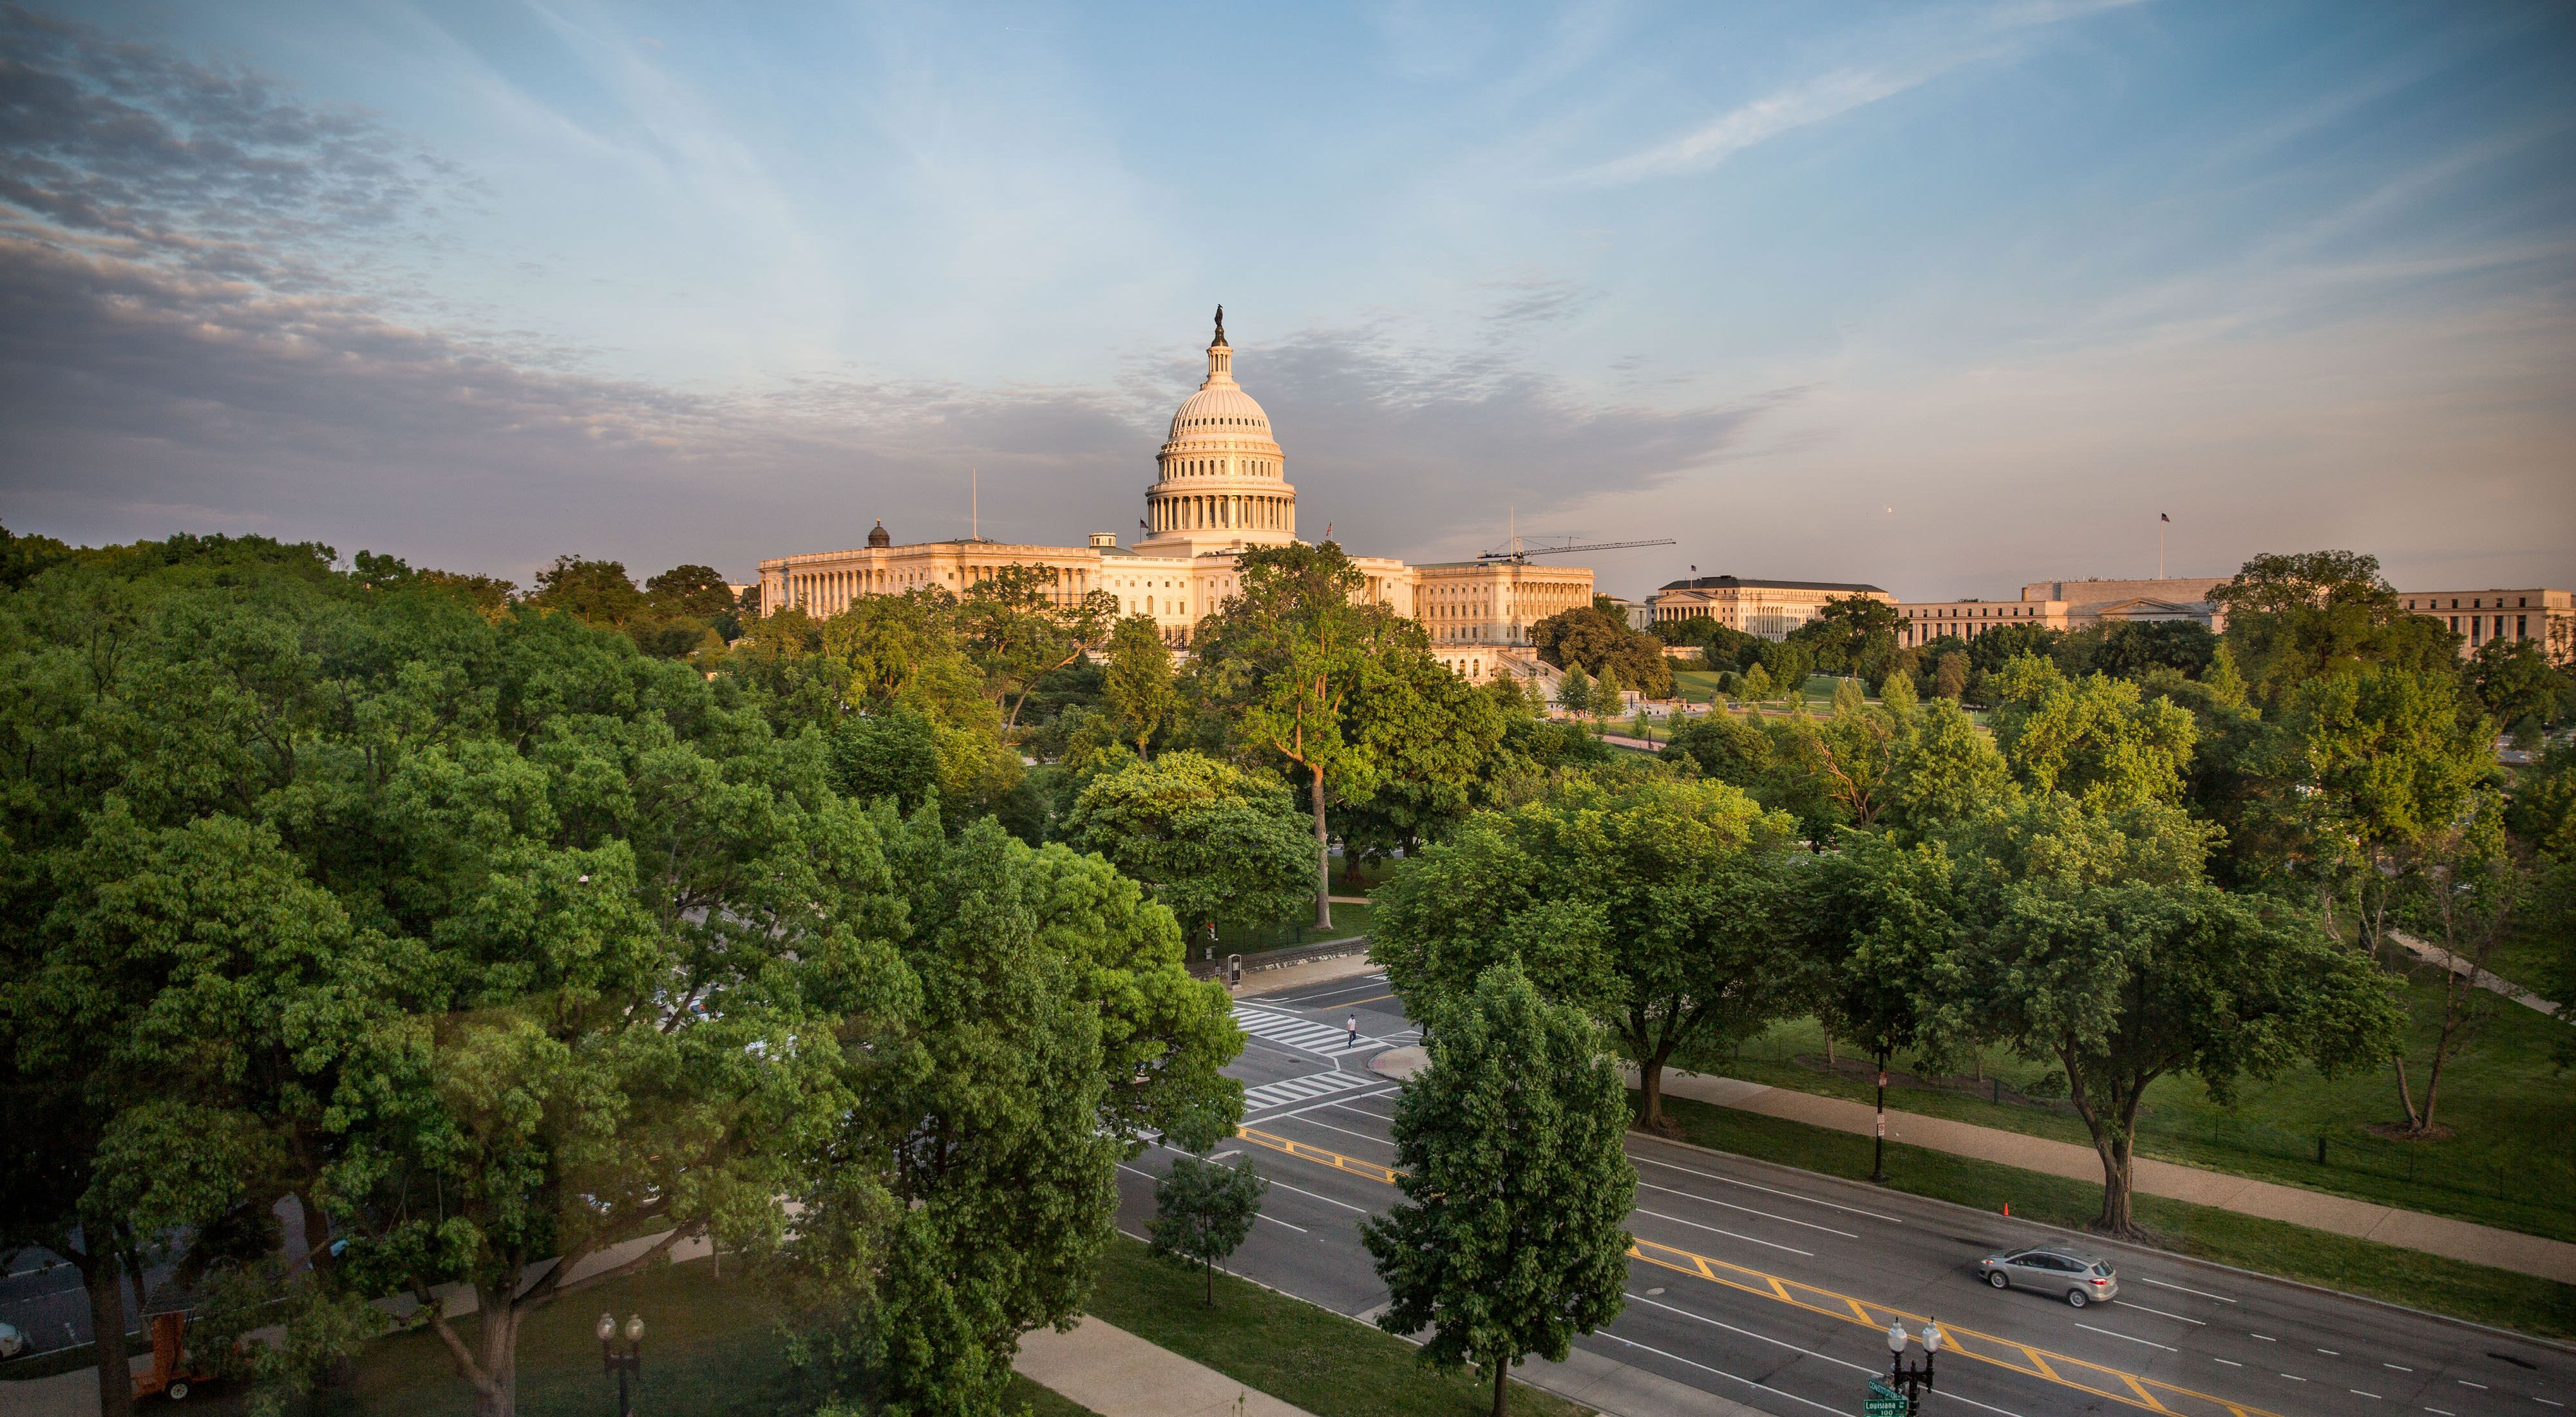 The United States Capitol in Washington, DC, USA.